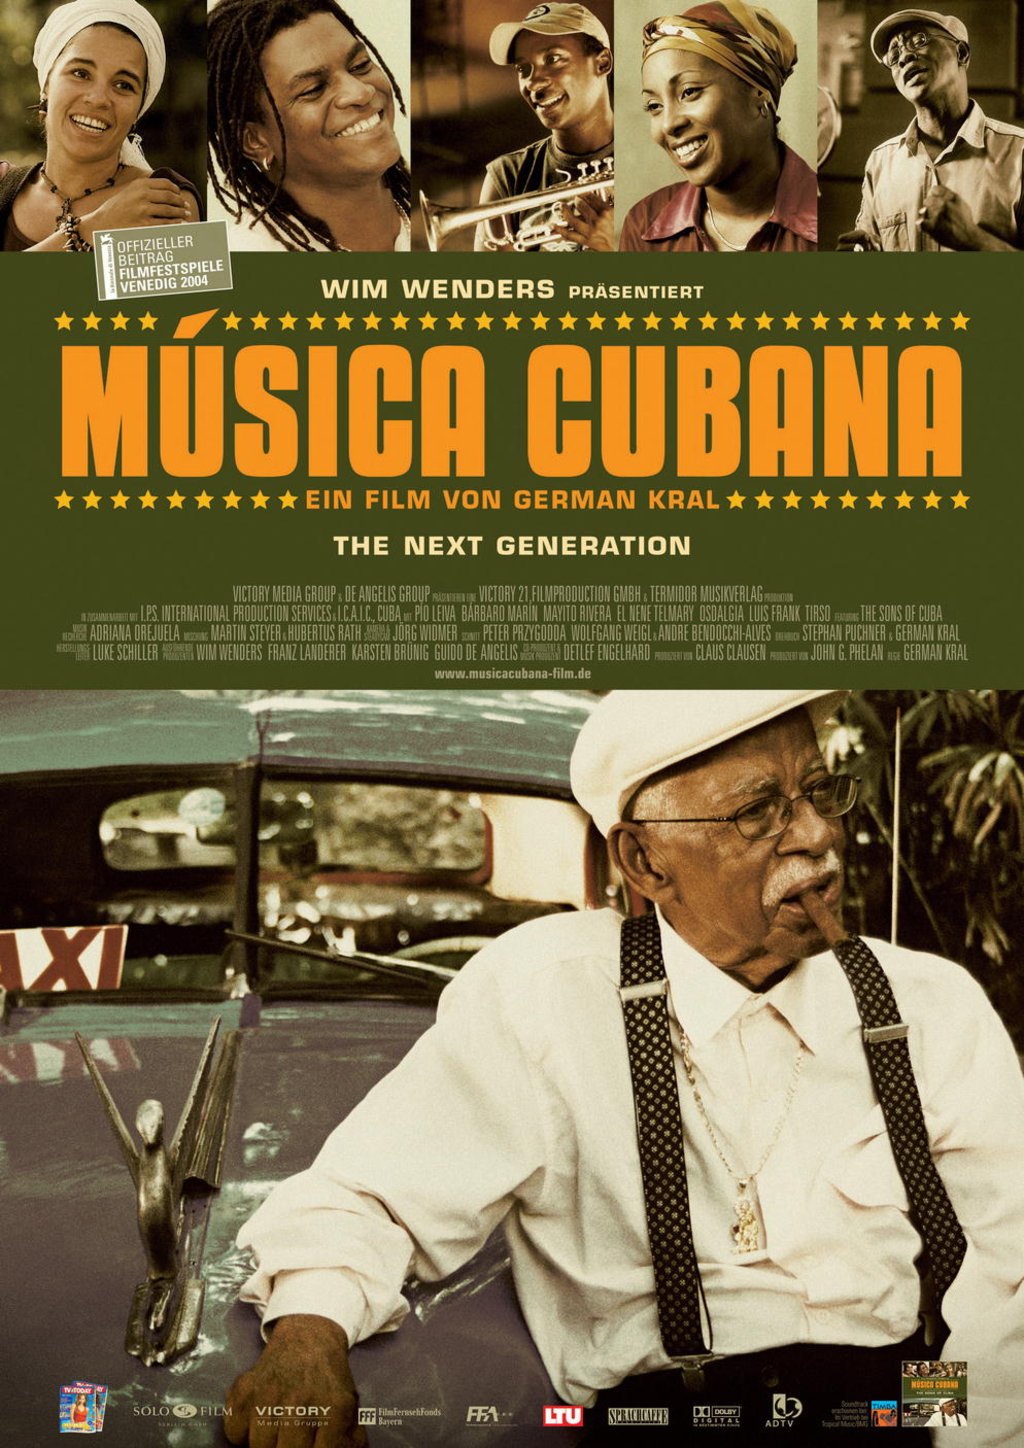 msica-cubana-musica-cubana-22-rcm1024x0u.jpg